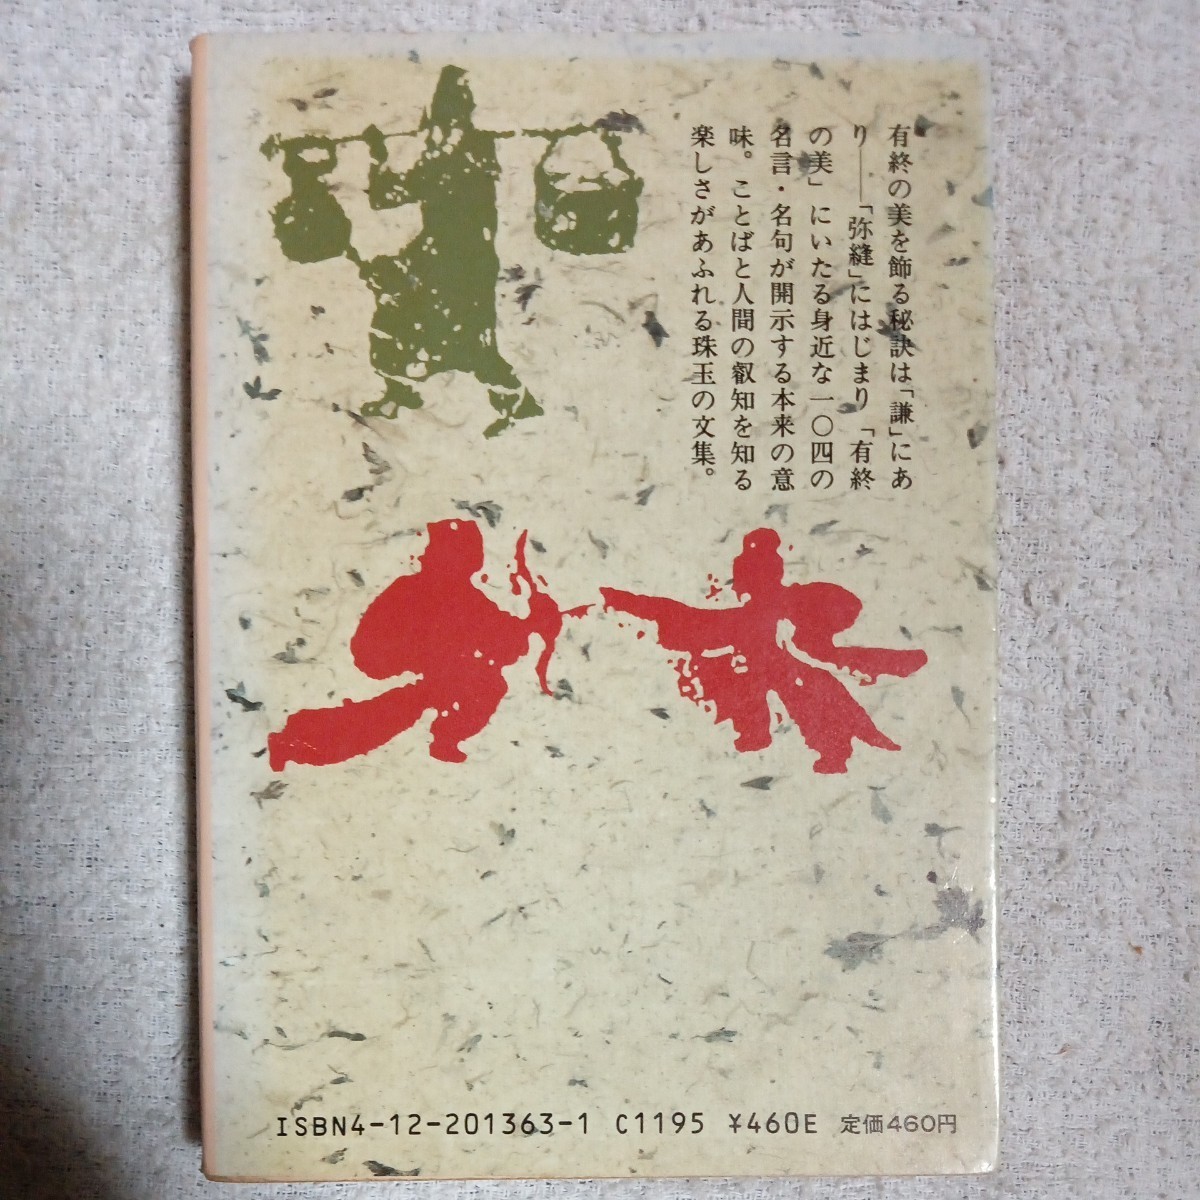 .. запись (.....) China название . сборник ( средний . библиотека ) Chin Shunshin с некоторыми замечаниями Junk 9784122013636